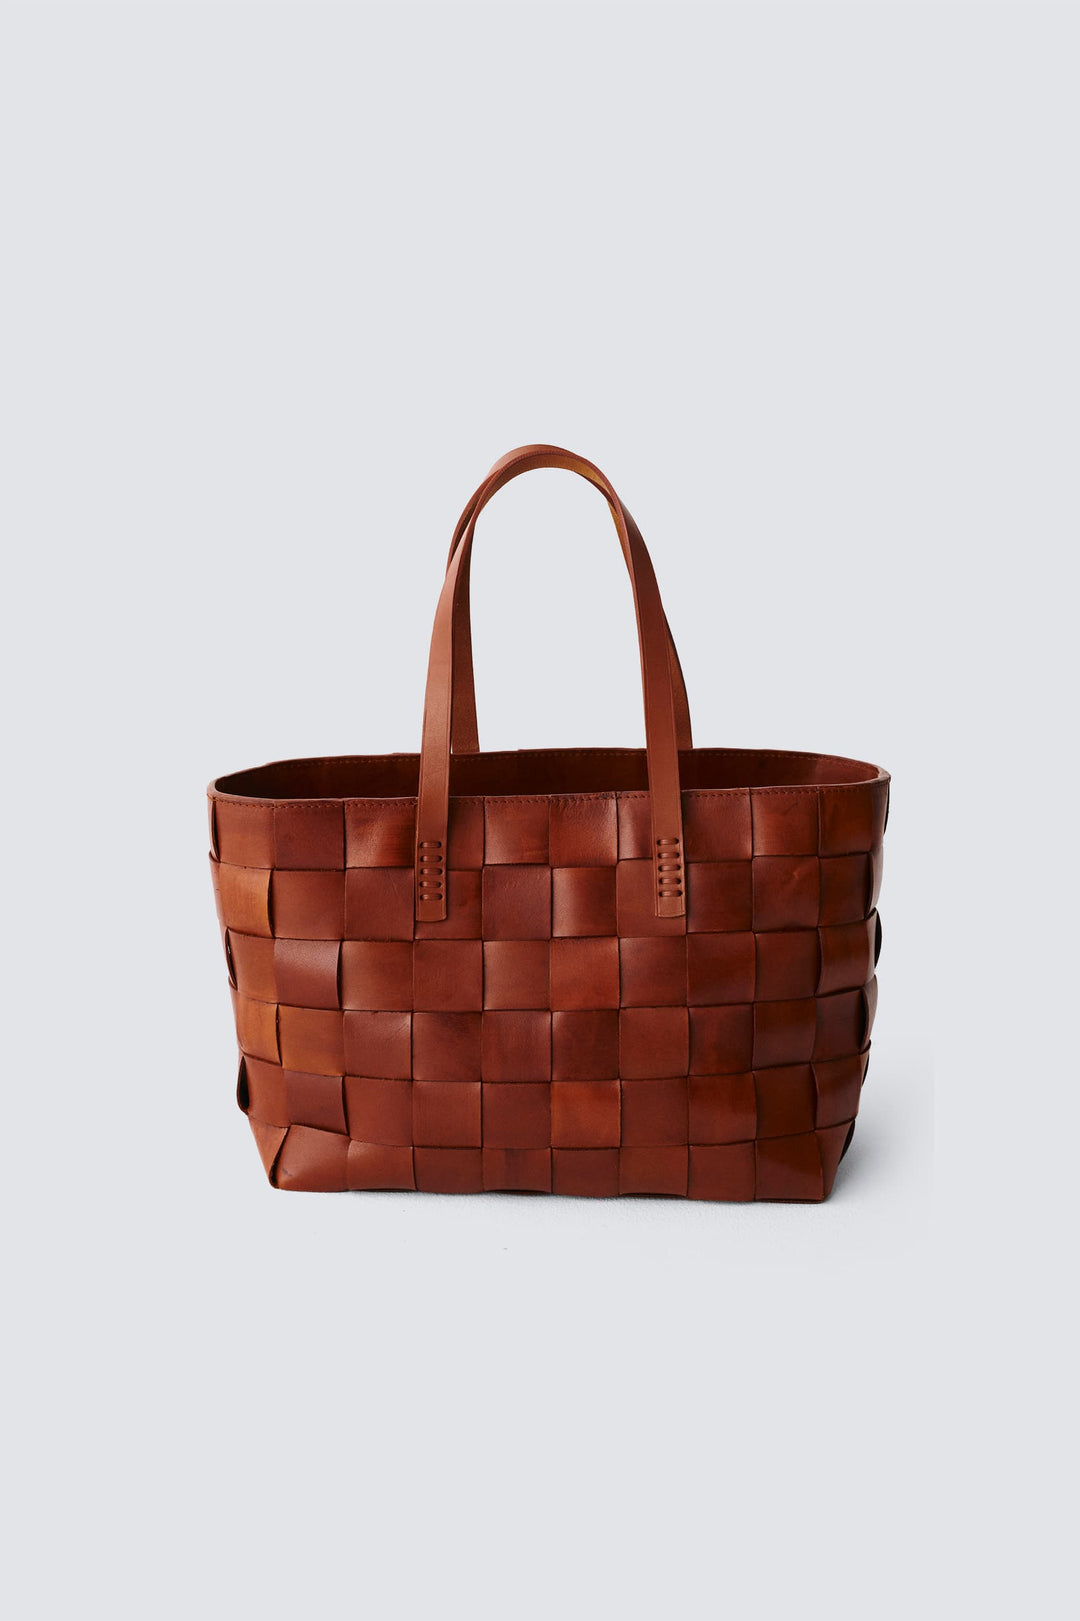 Dragon Diffusion - Japan Tote Tan Woven Leather Bag